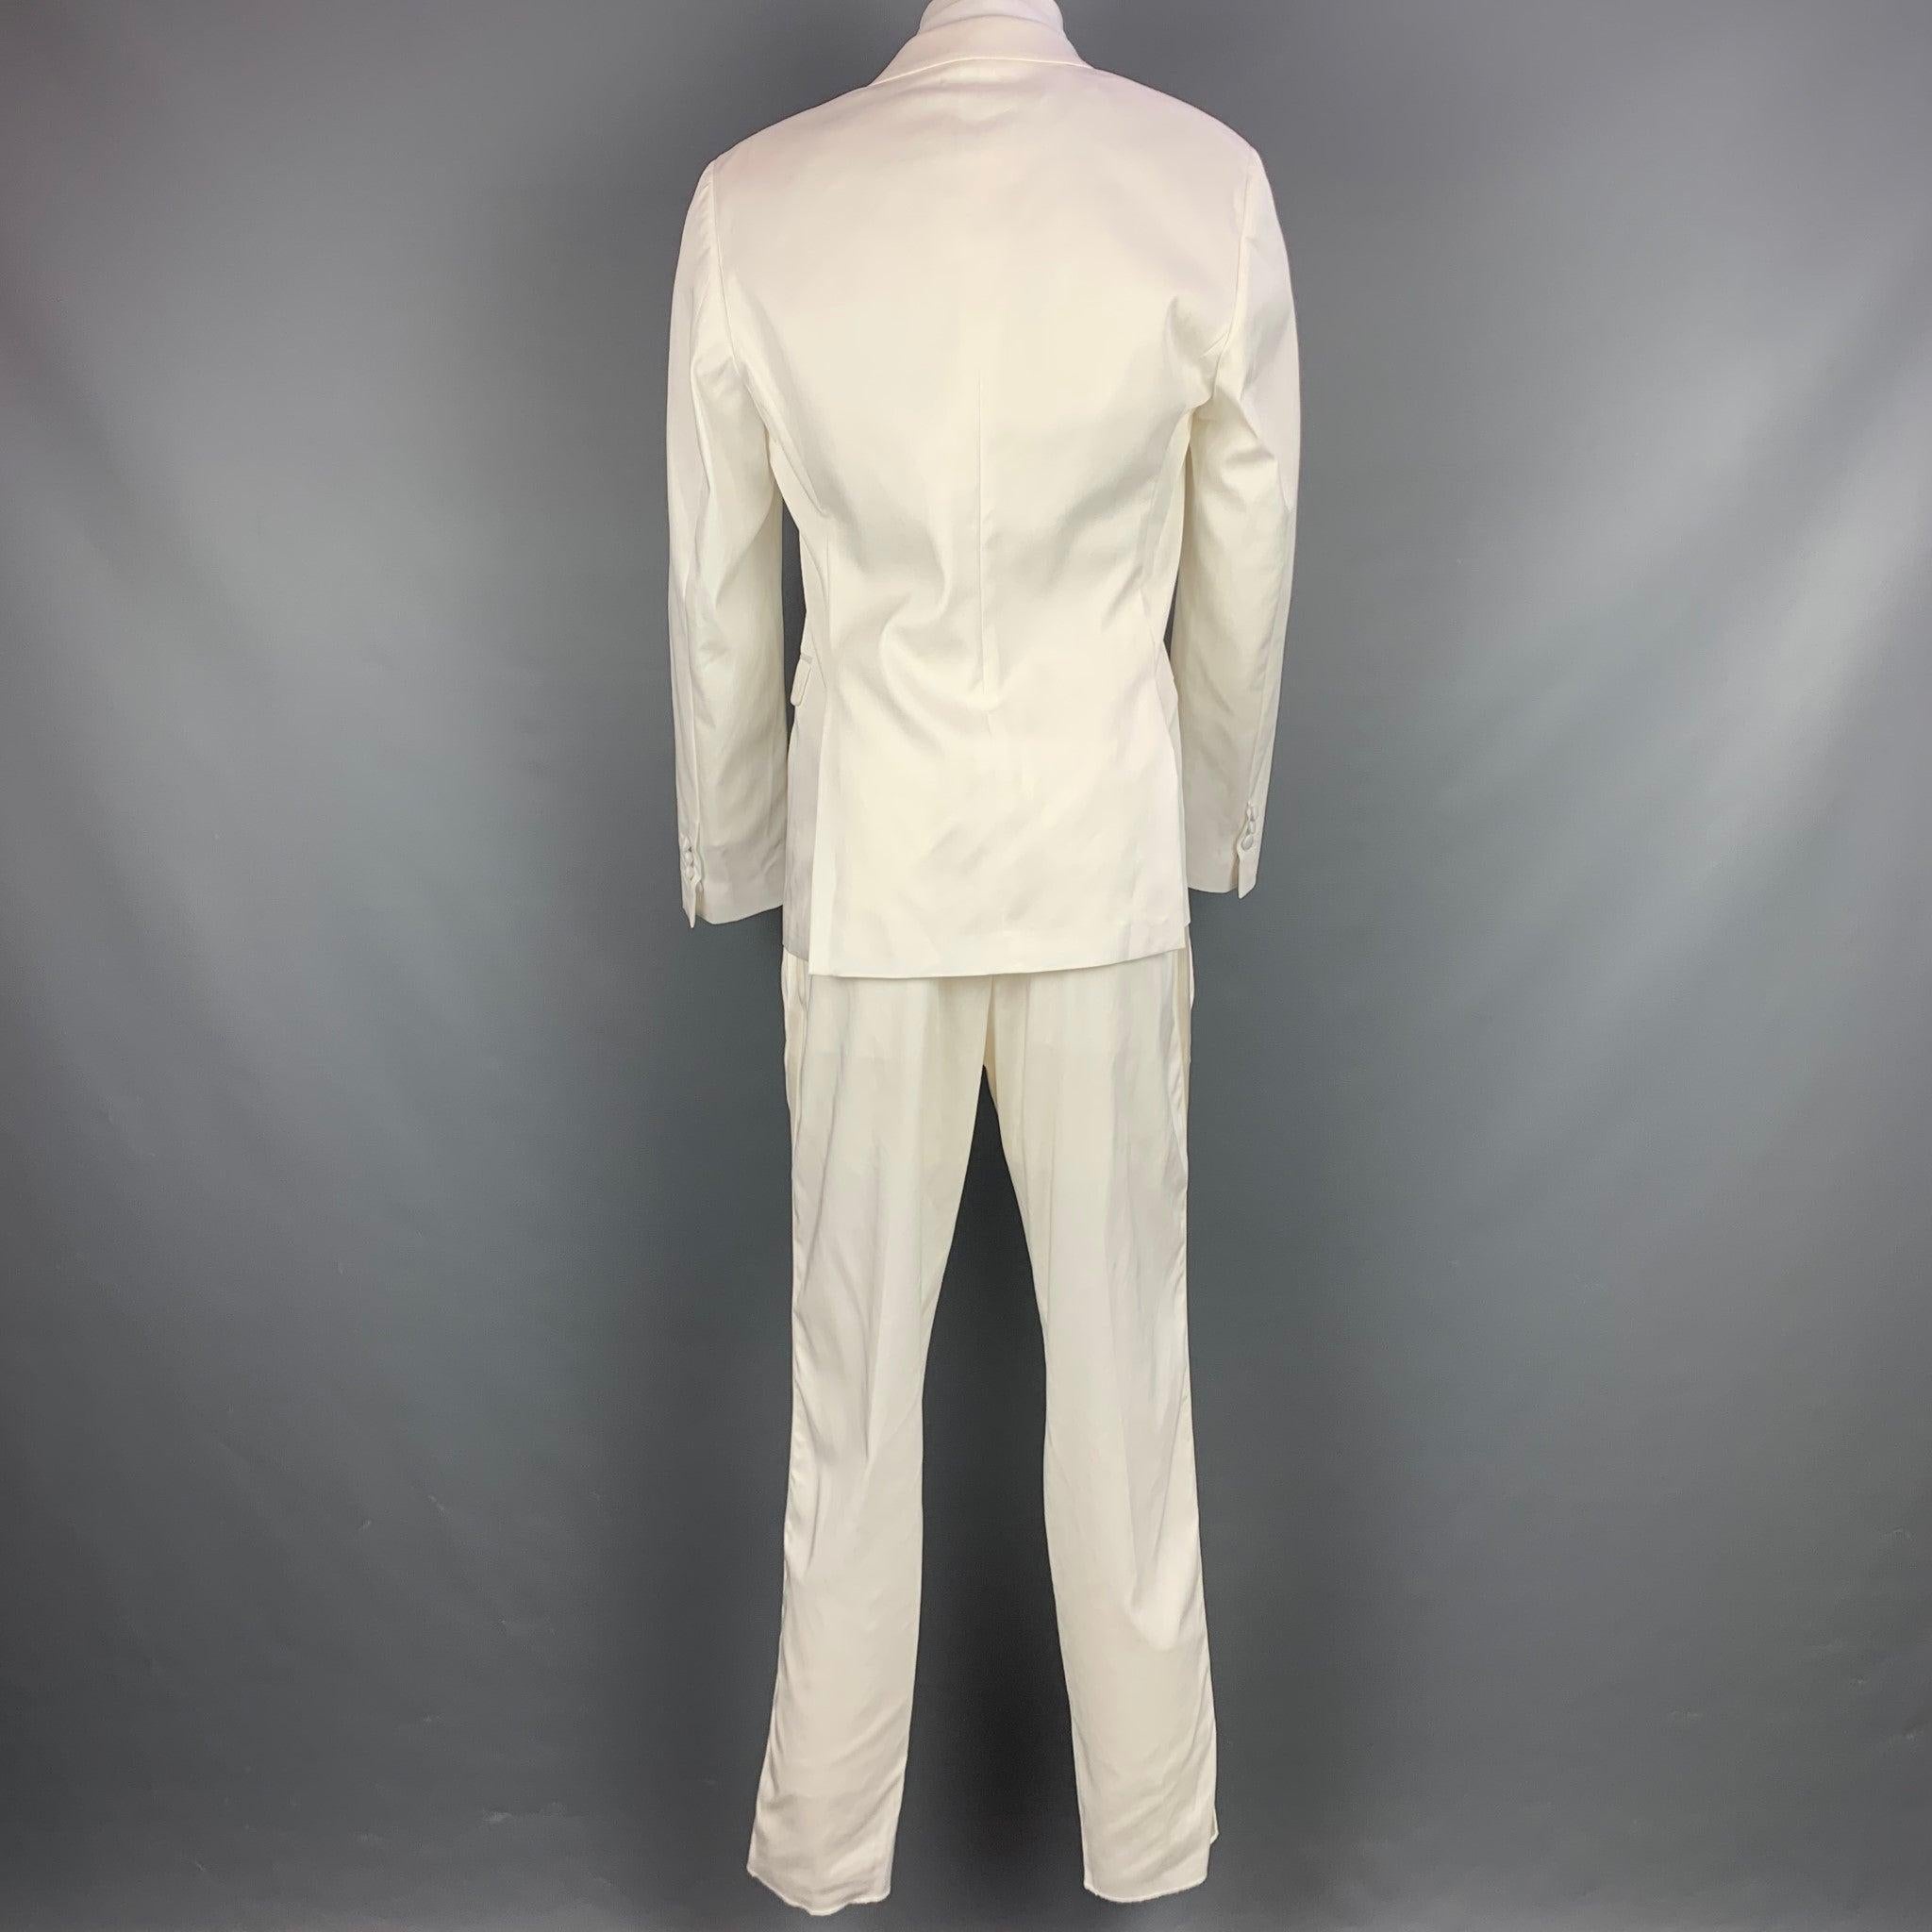 NEIL BARRETT Size 40 White Tencel Blend Notch Lapel Tuxedo Suit In Good Condition For Sale In San Francisco, CA